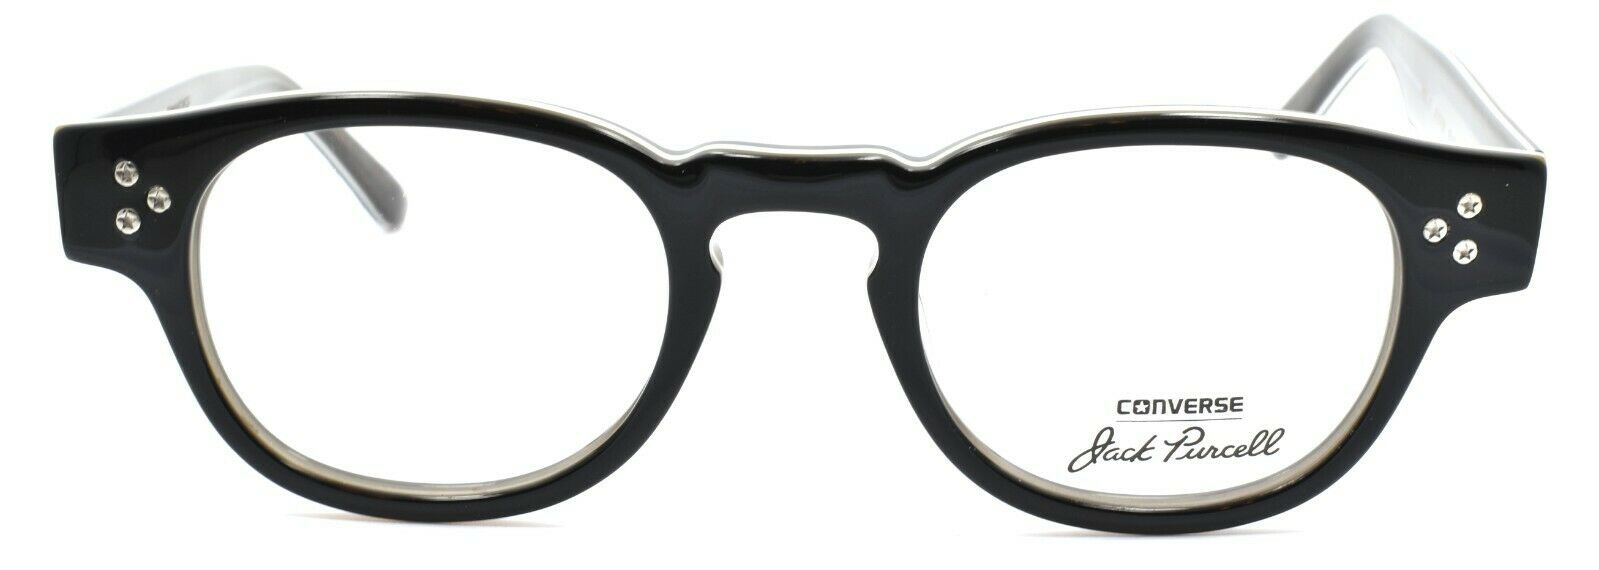 2-CONVERSE Jack Purcell P002 UF Men's Eyeglasses Frames 46-22-150 Black Stripe-751286260496-IKSpecs